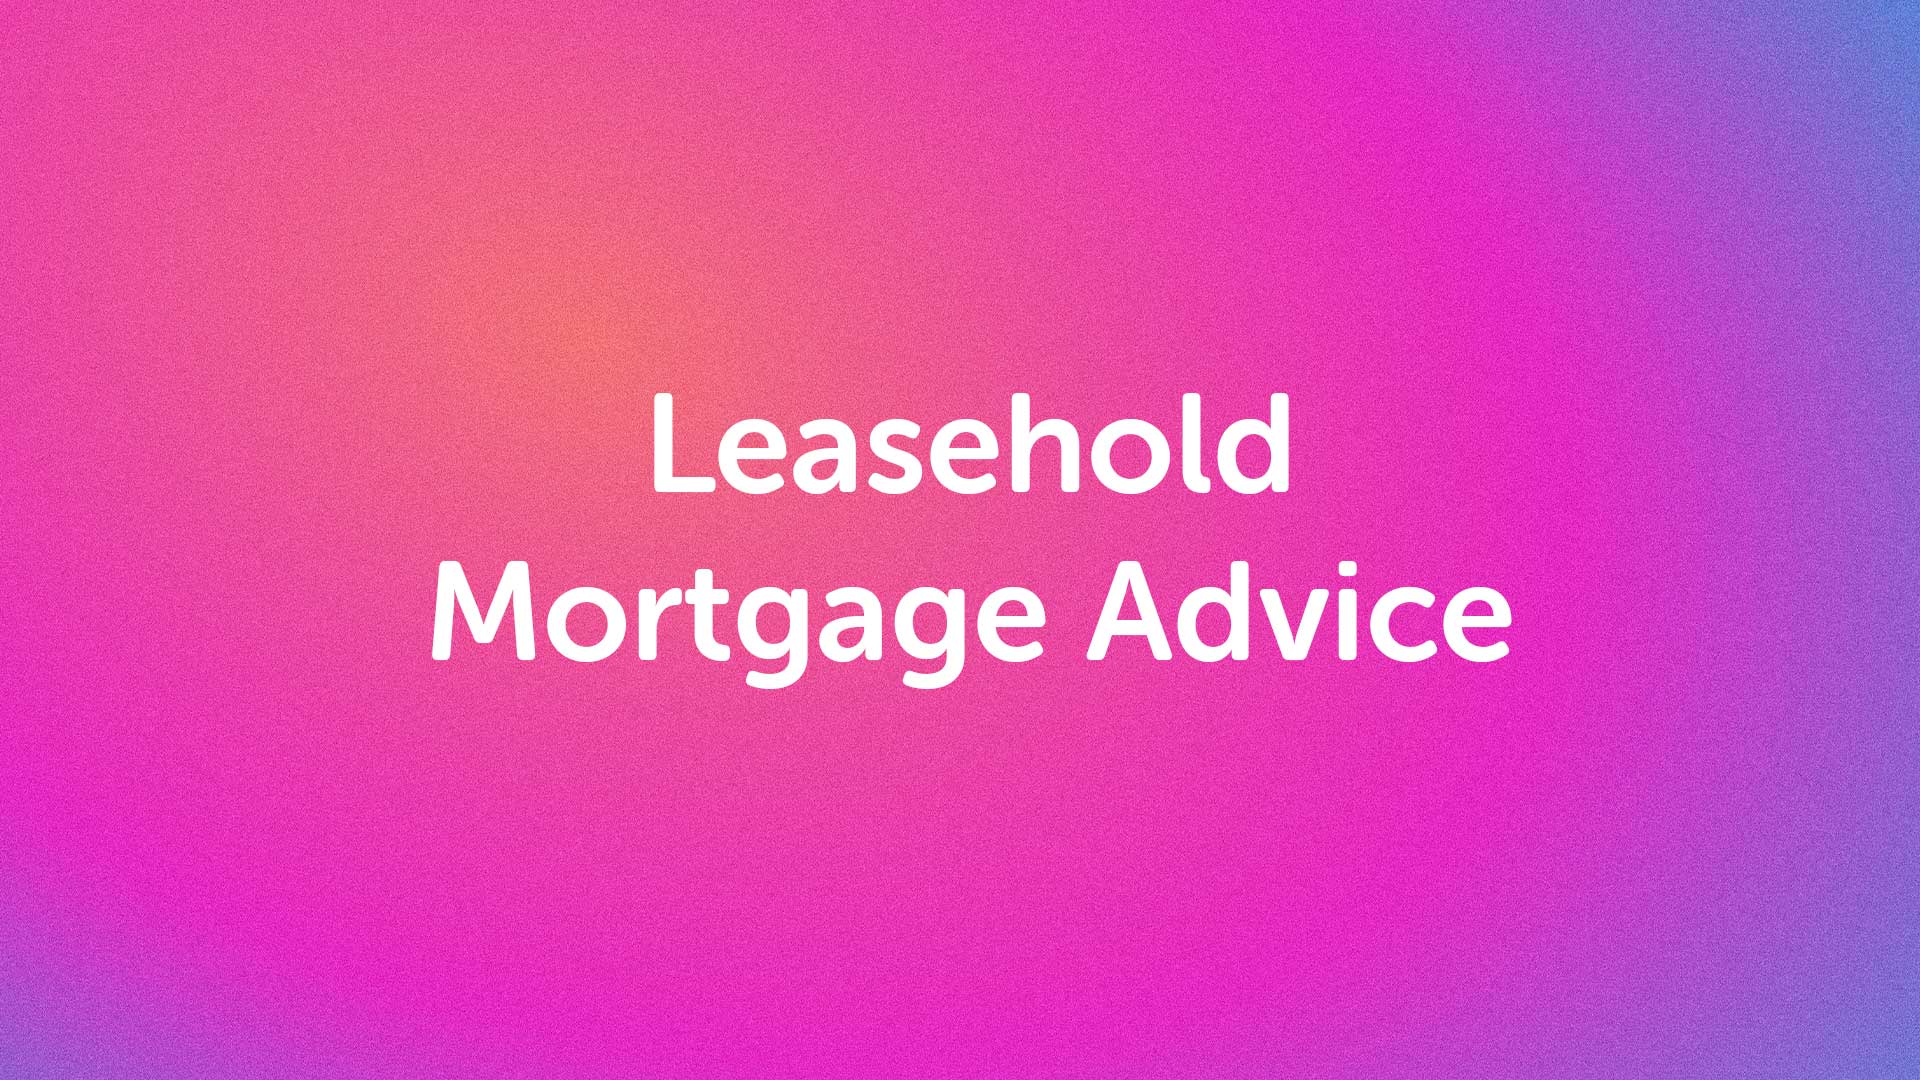 Leasehold Mortgage Advice in Sunderland